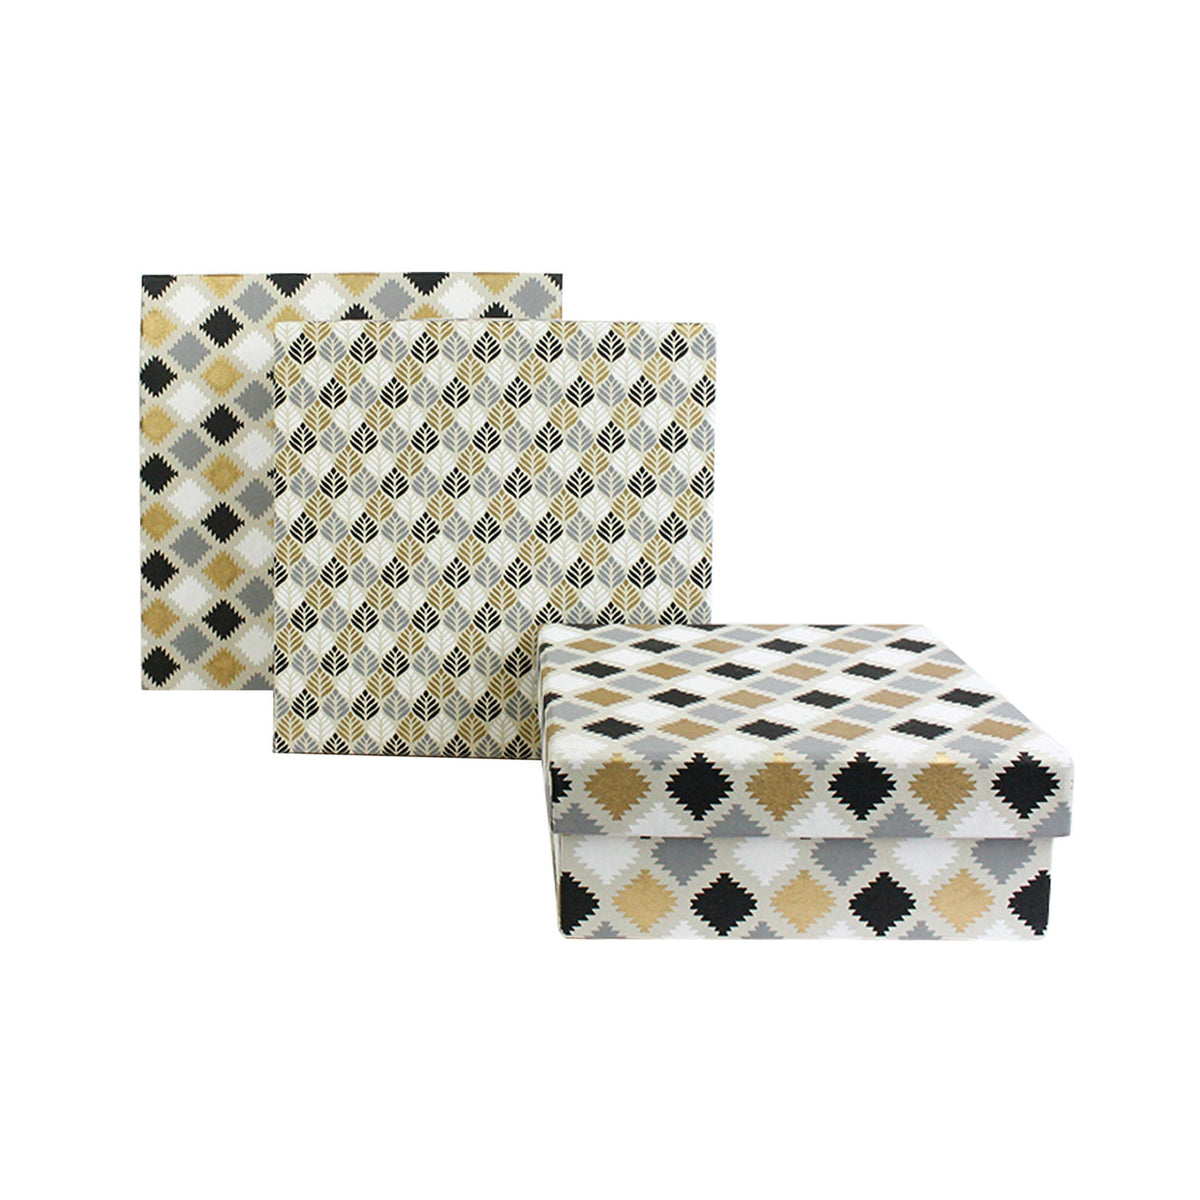 Handmade Geometric Patterned Black/Gold Gift Boxes - Set of 3